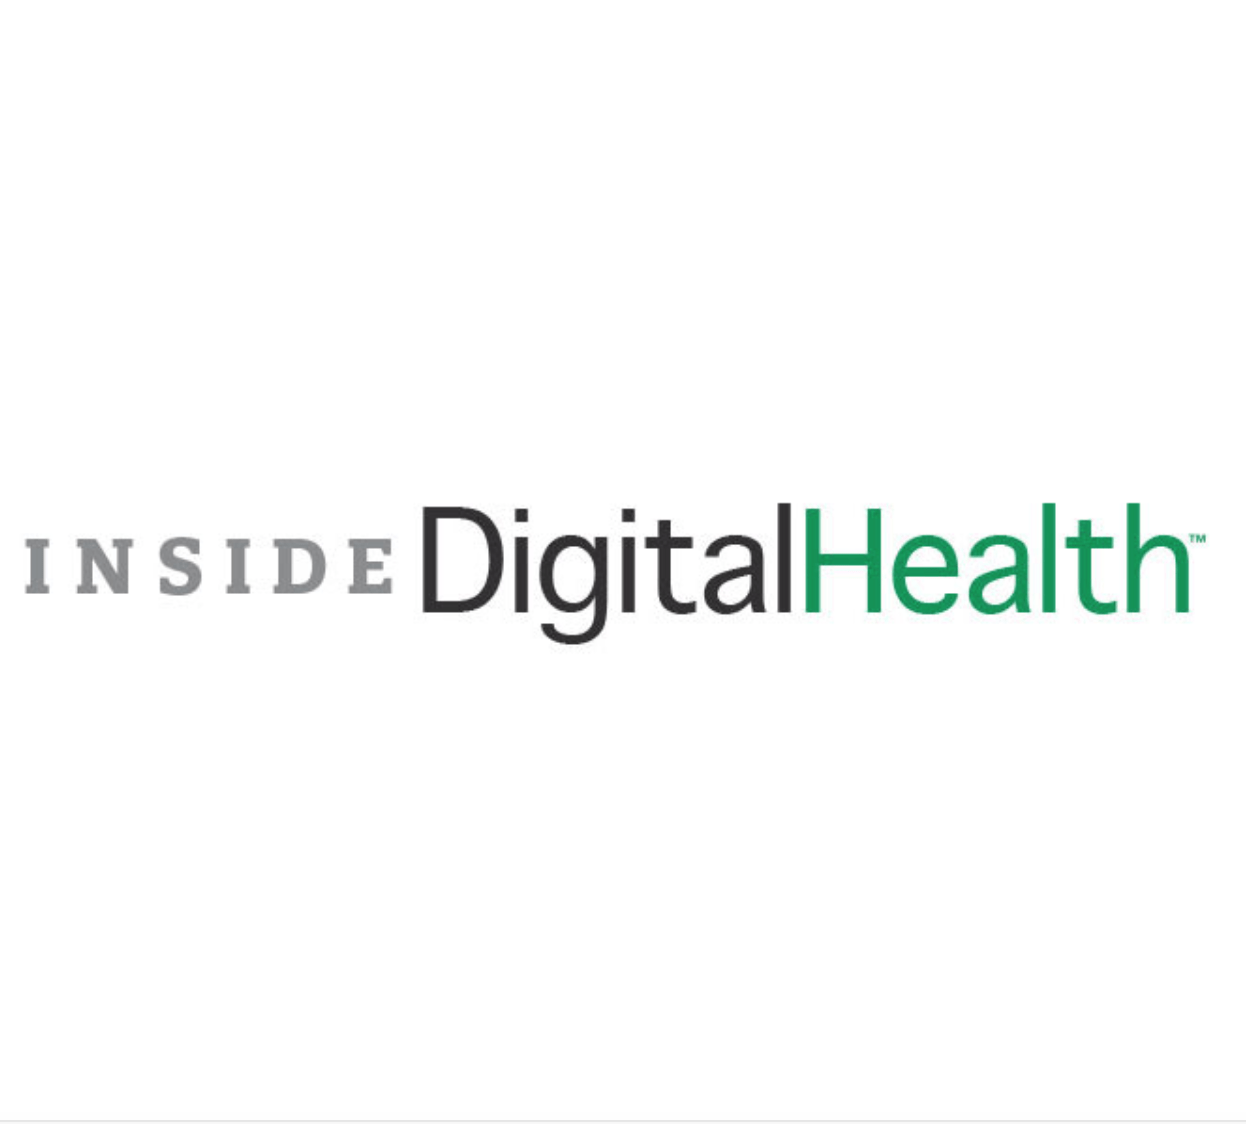 Inside Digital Health